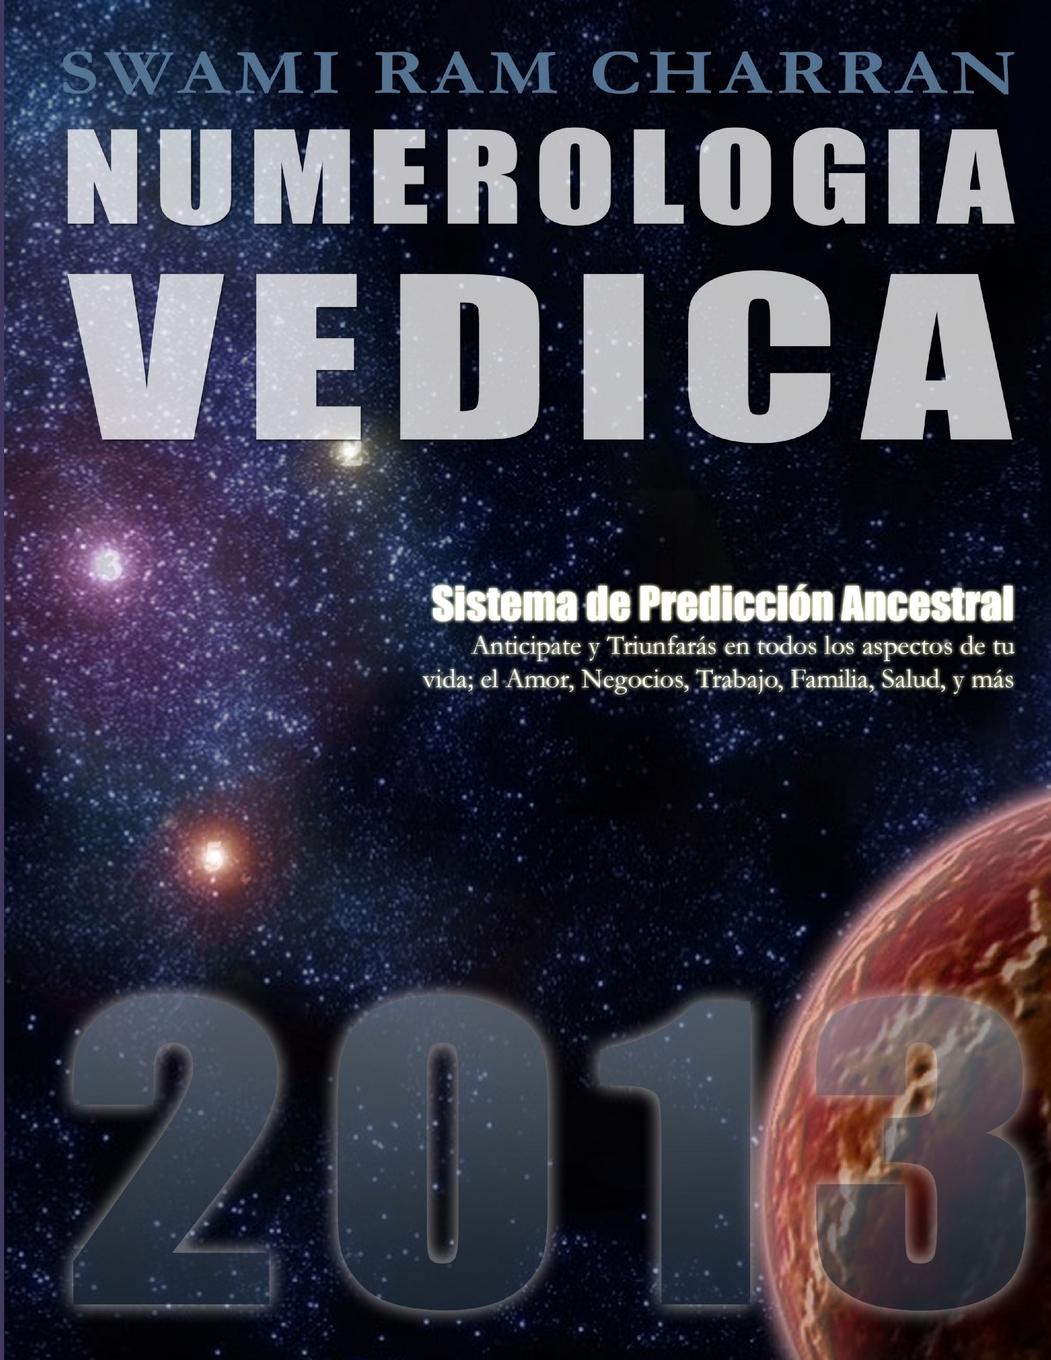 Книга NUMEROLOGIA VEDICA 2013 